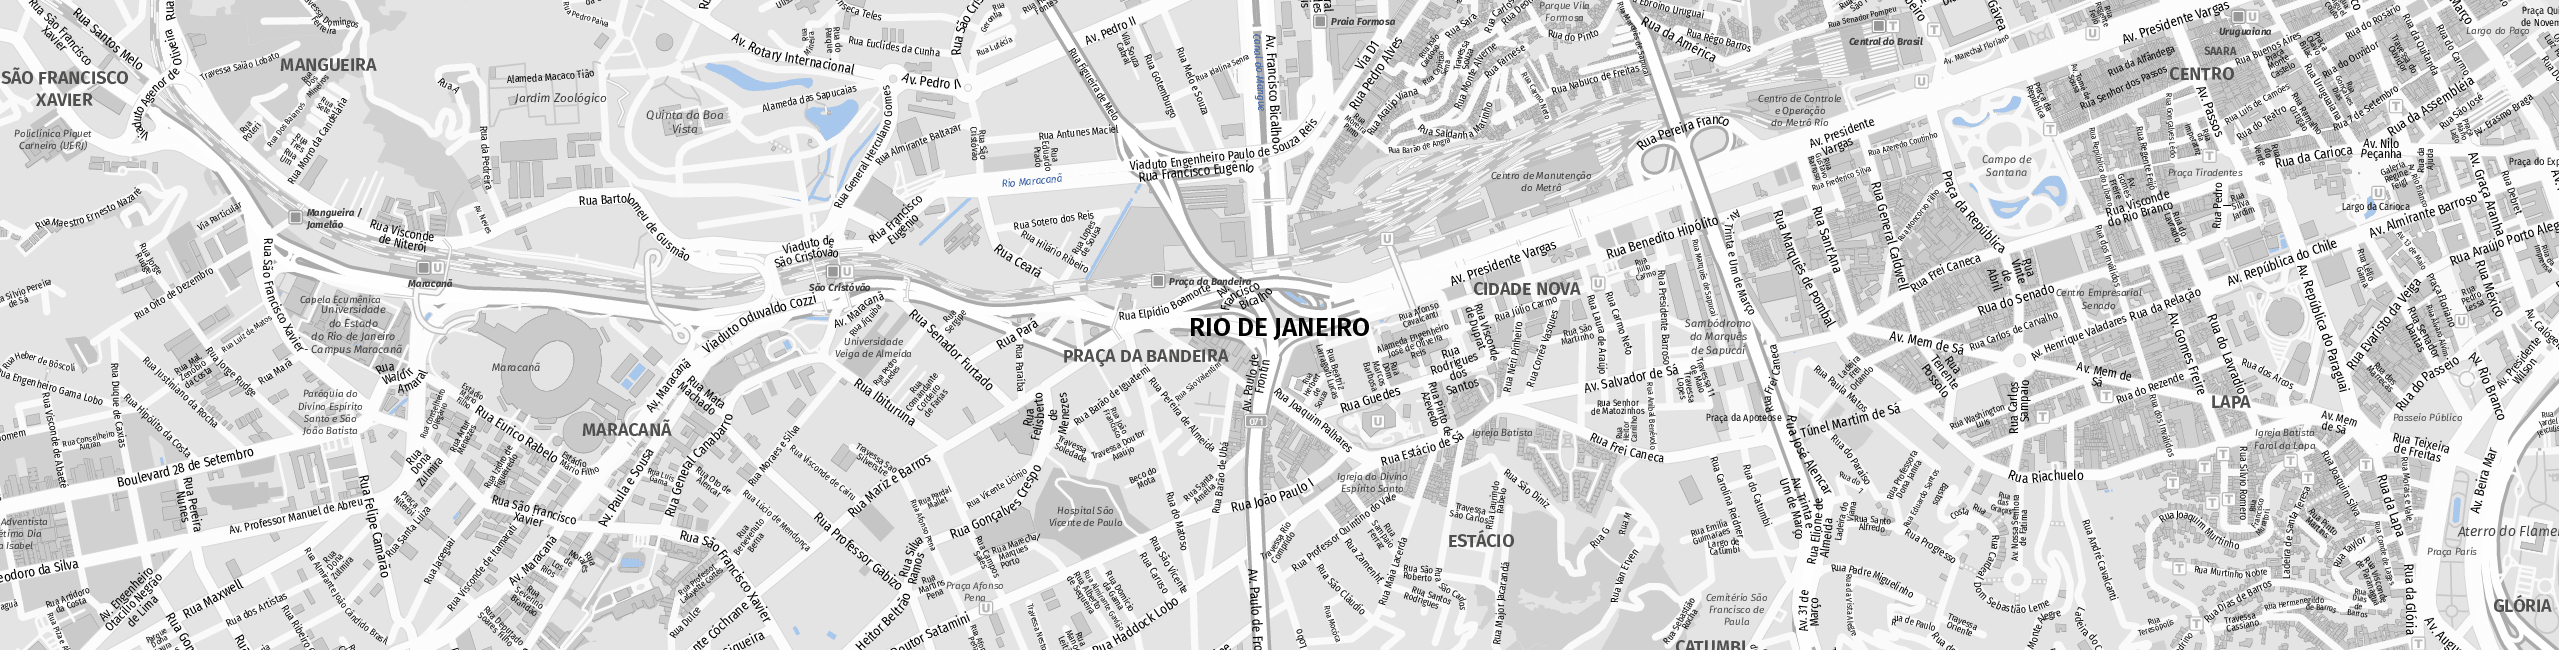 Stadtplan Rio de Janeiro zum Downloaden.